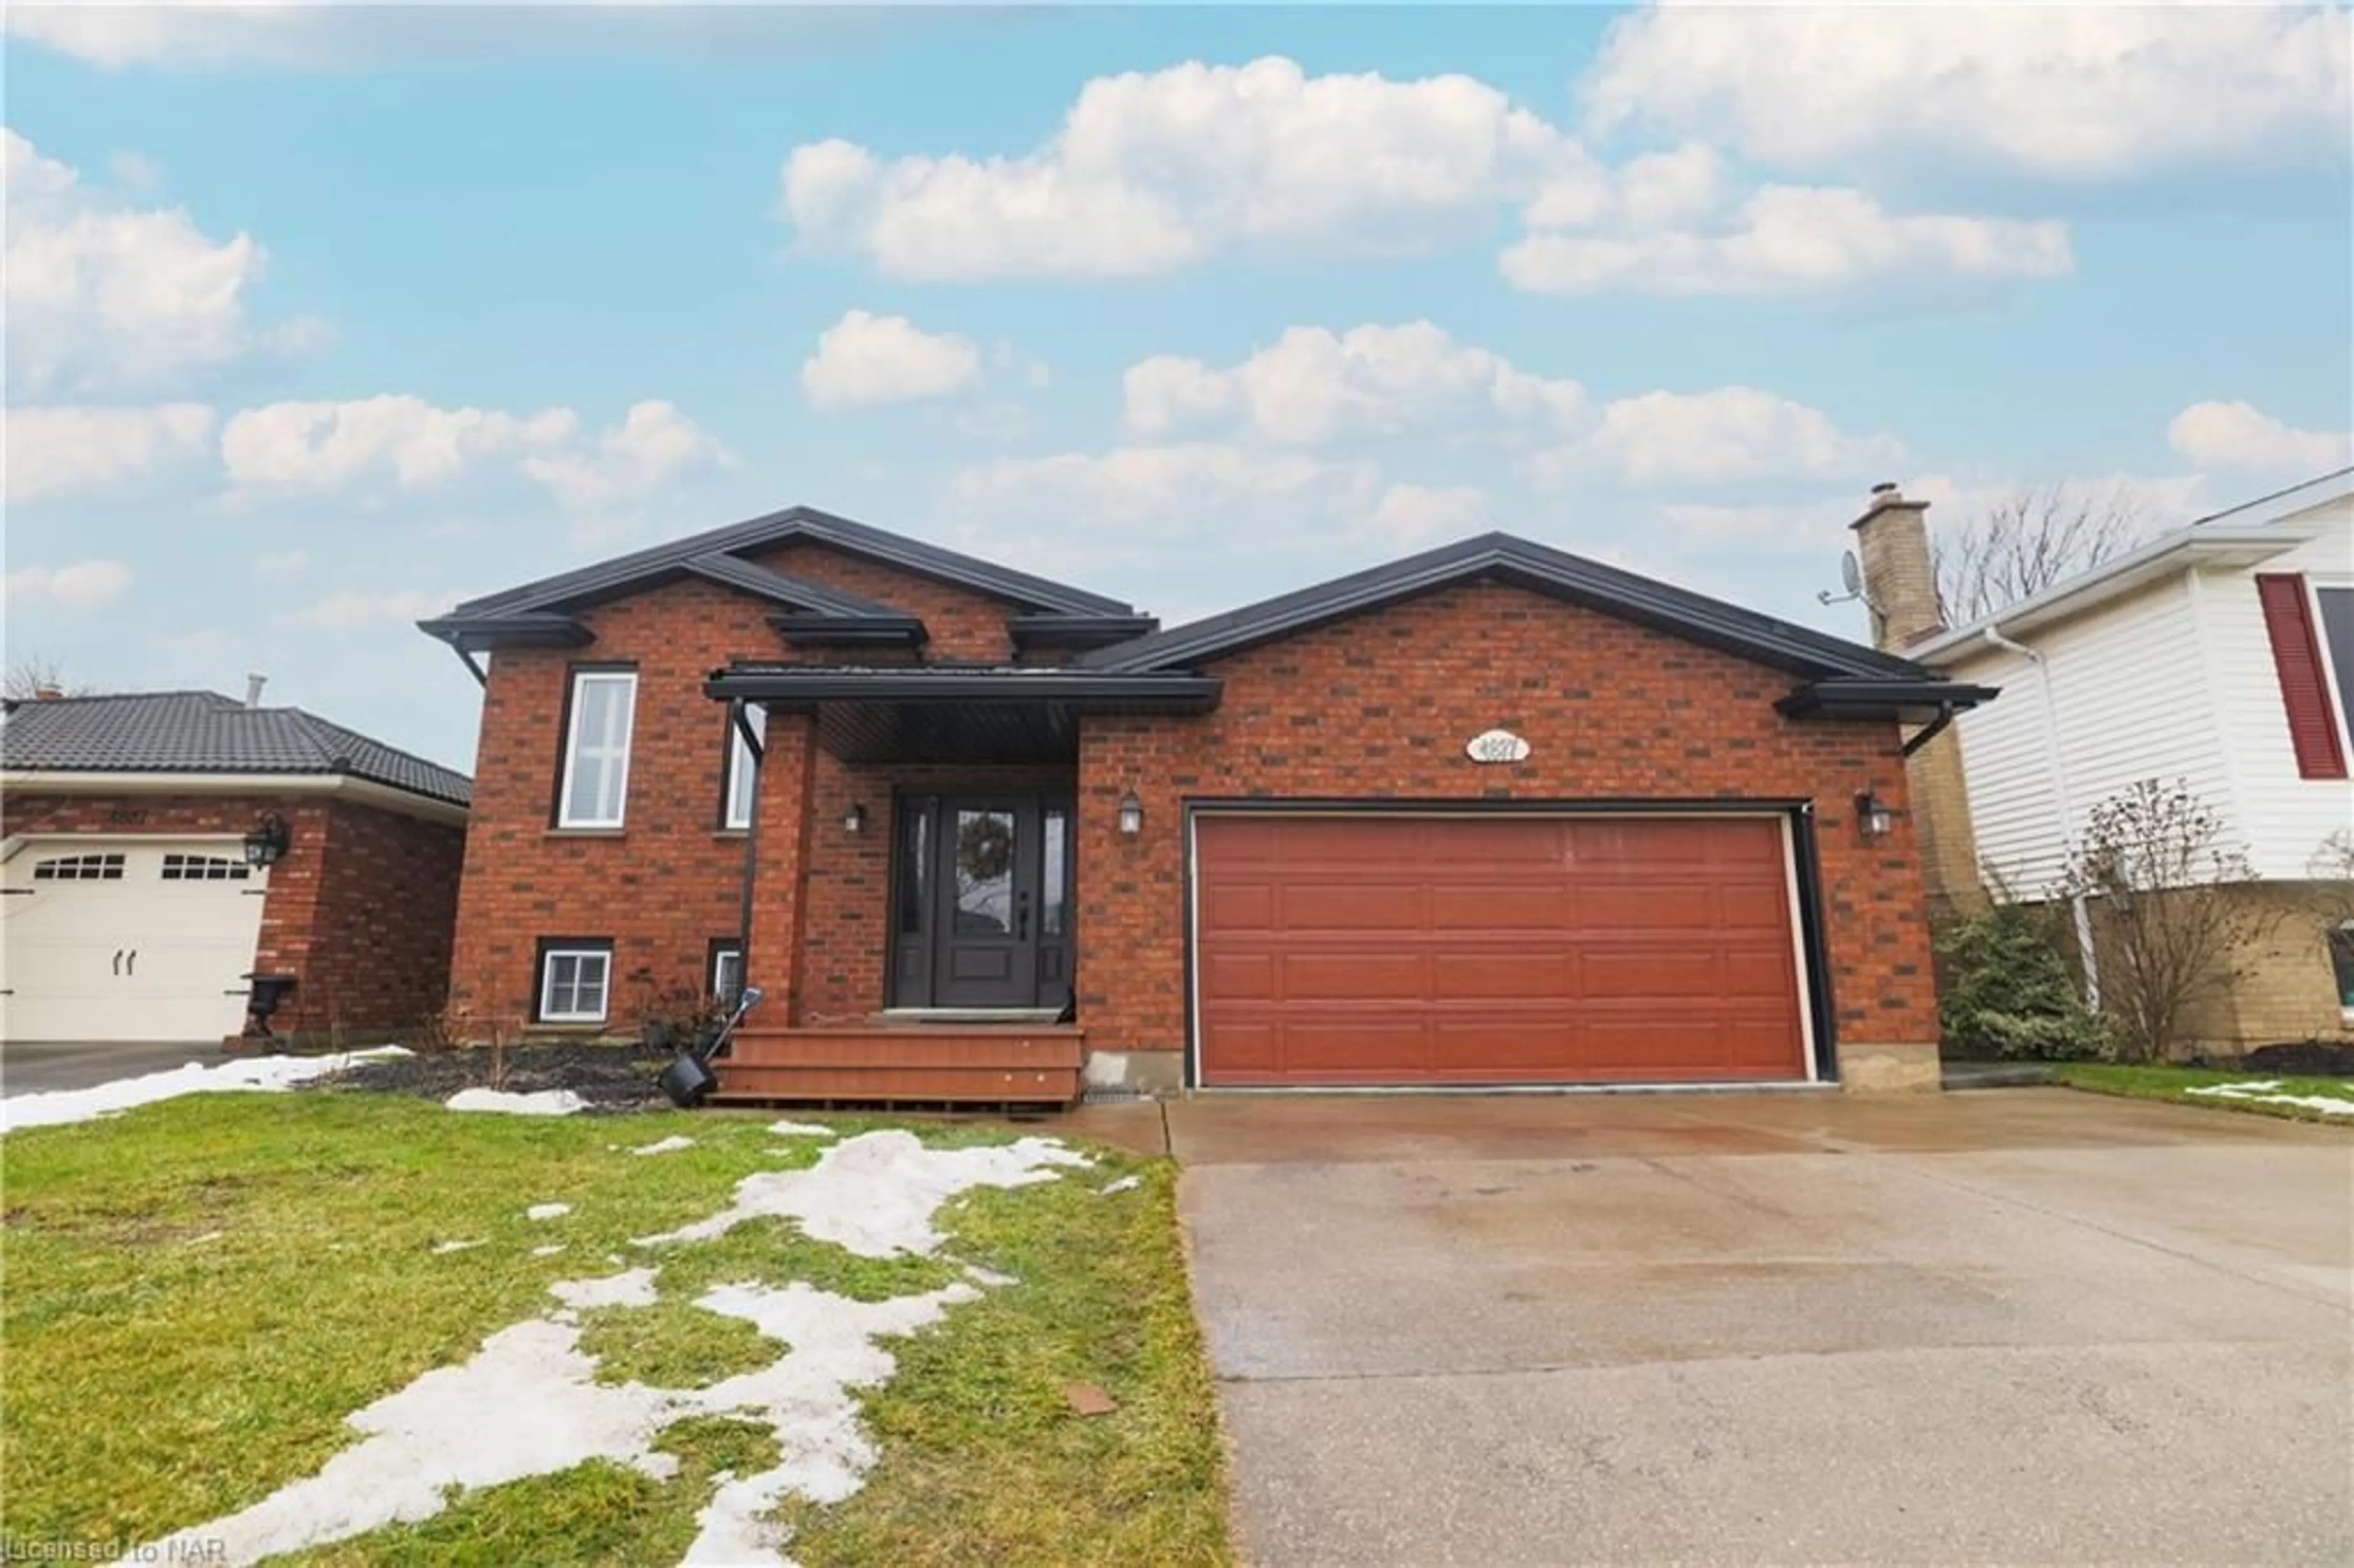 Home with brick exterior material for 4877 Tara Ave, Niagara Falls Ontario L2H 2V7